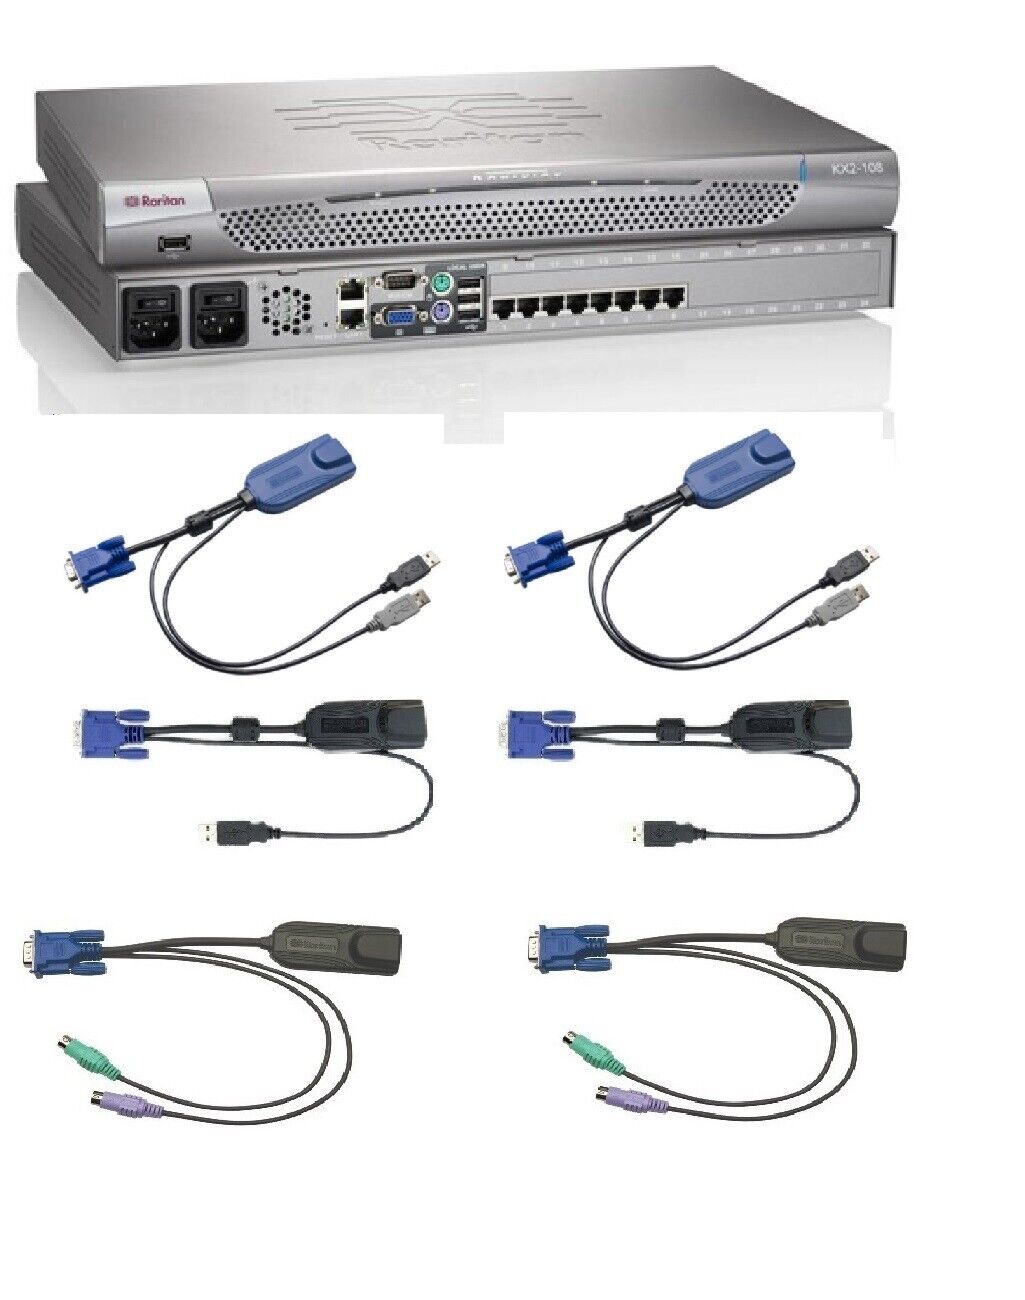 Raritan KX2-108 DKX2-108 8 Port KVM over IP Switch 2 D2CIM-DVUSB 2DCIM-USBG2 PS2